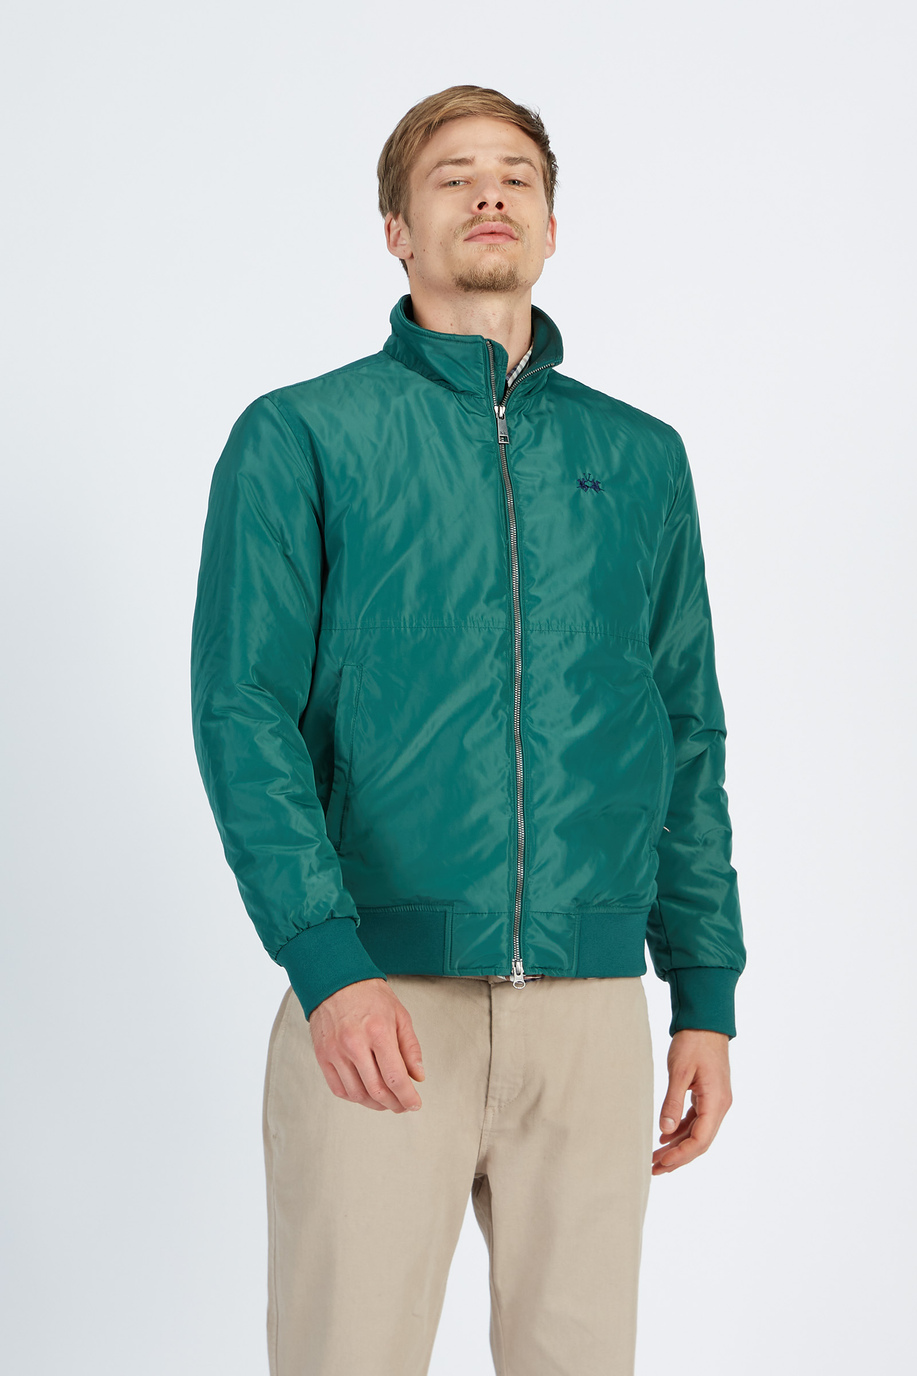 Men’s jacket in nylon regular fit model - Outdoor | La Martina - Official Online Shop